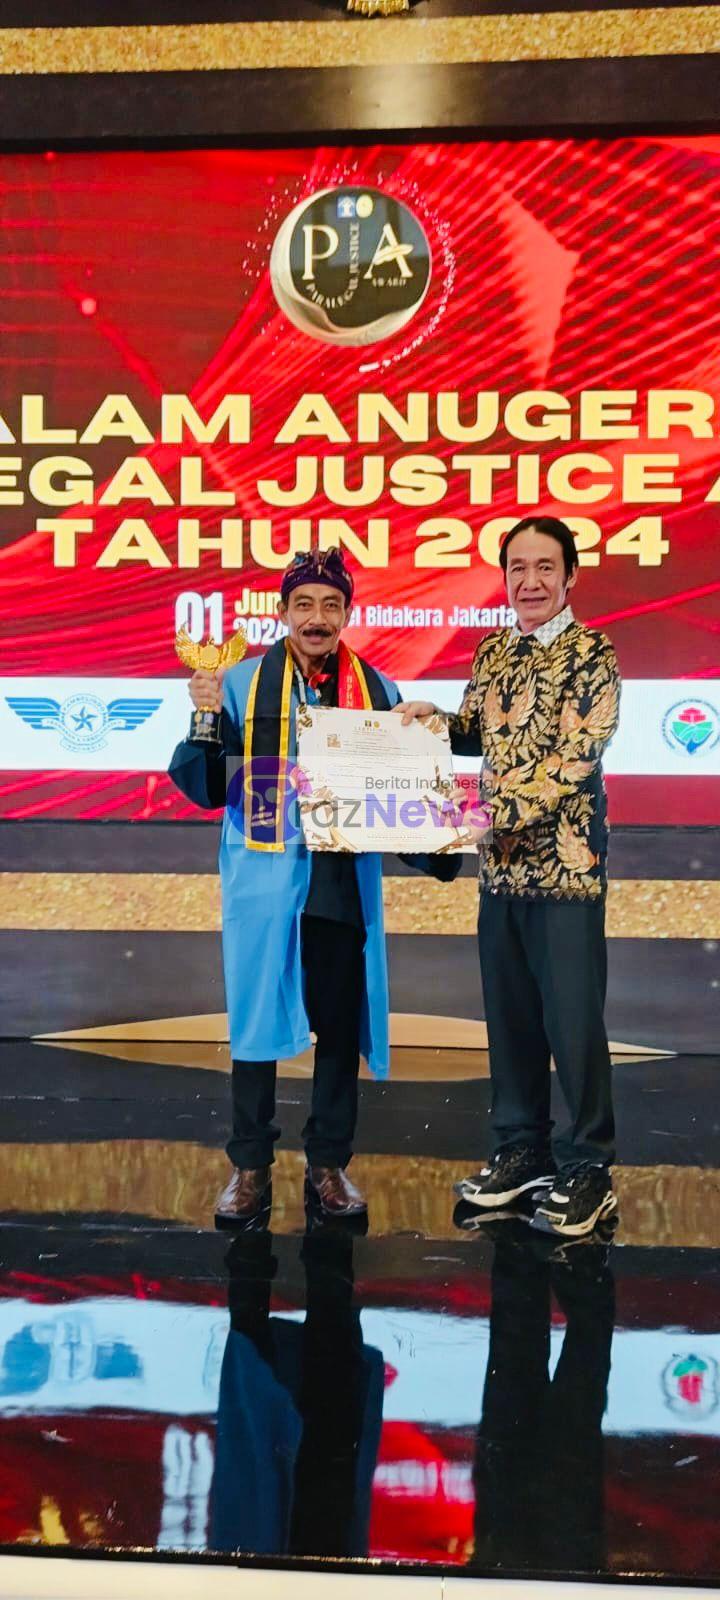 Raden Akria Buana NL. P Kabupaten Lombok Utara Berhasil Meraih 2 Kategori Anugerah Paralegal Justice Award 2024